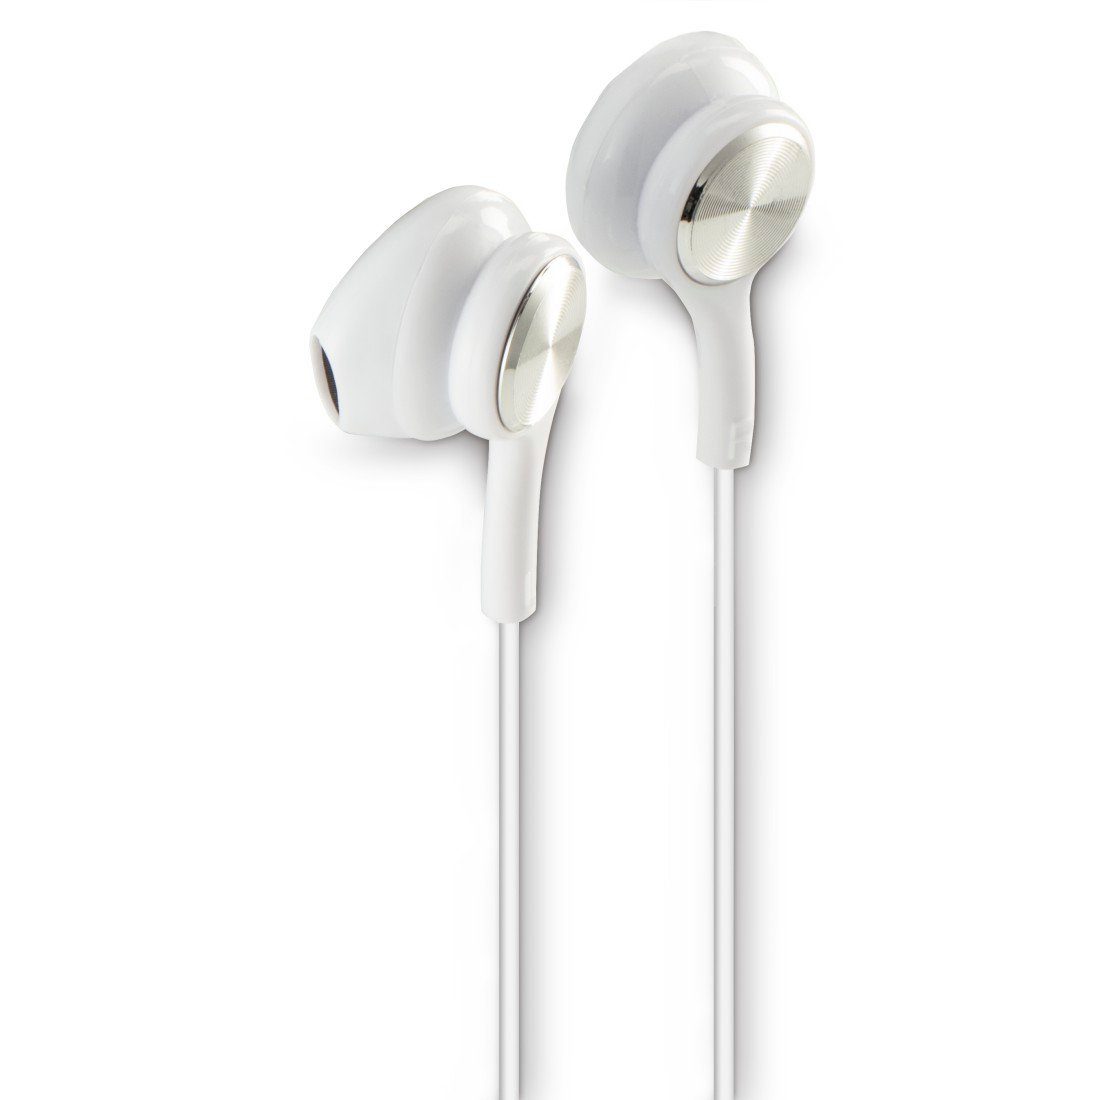 Hama Earbuds Stereo mit Google weiß USB-C, 1,2 In-Ear-Kopfhörer Kopfhörer Assistant) m Mikrofon, Telefonfunktion, (Sprachsteuerung